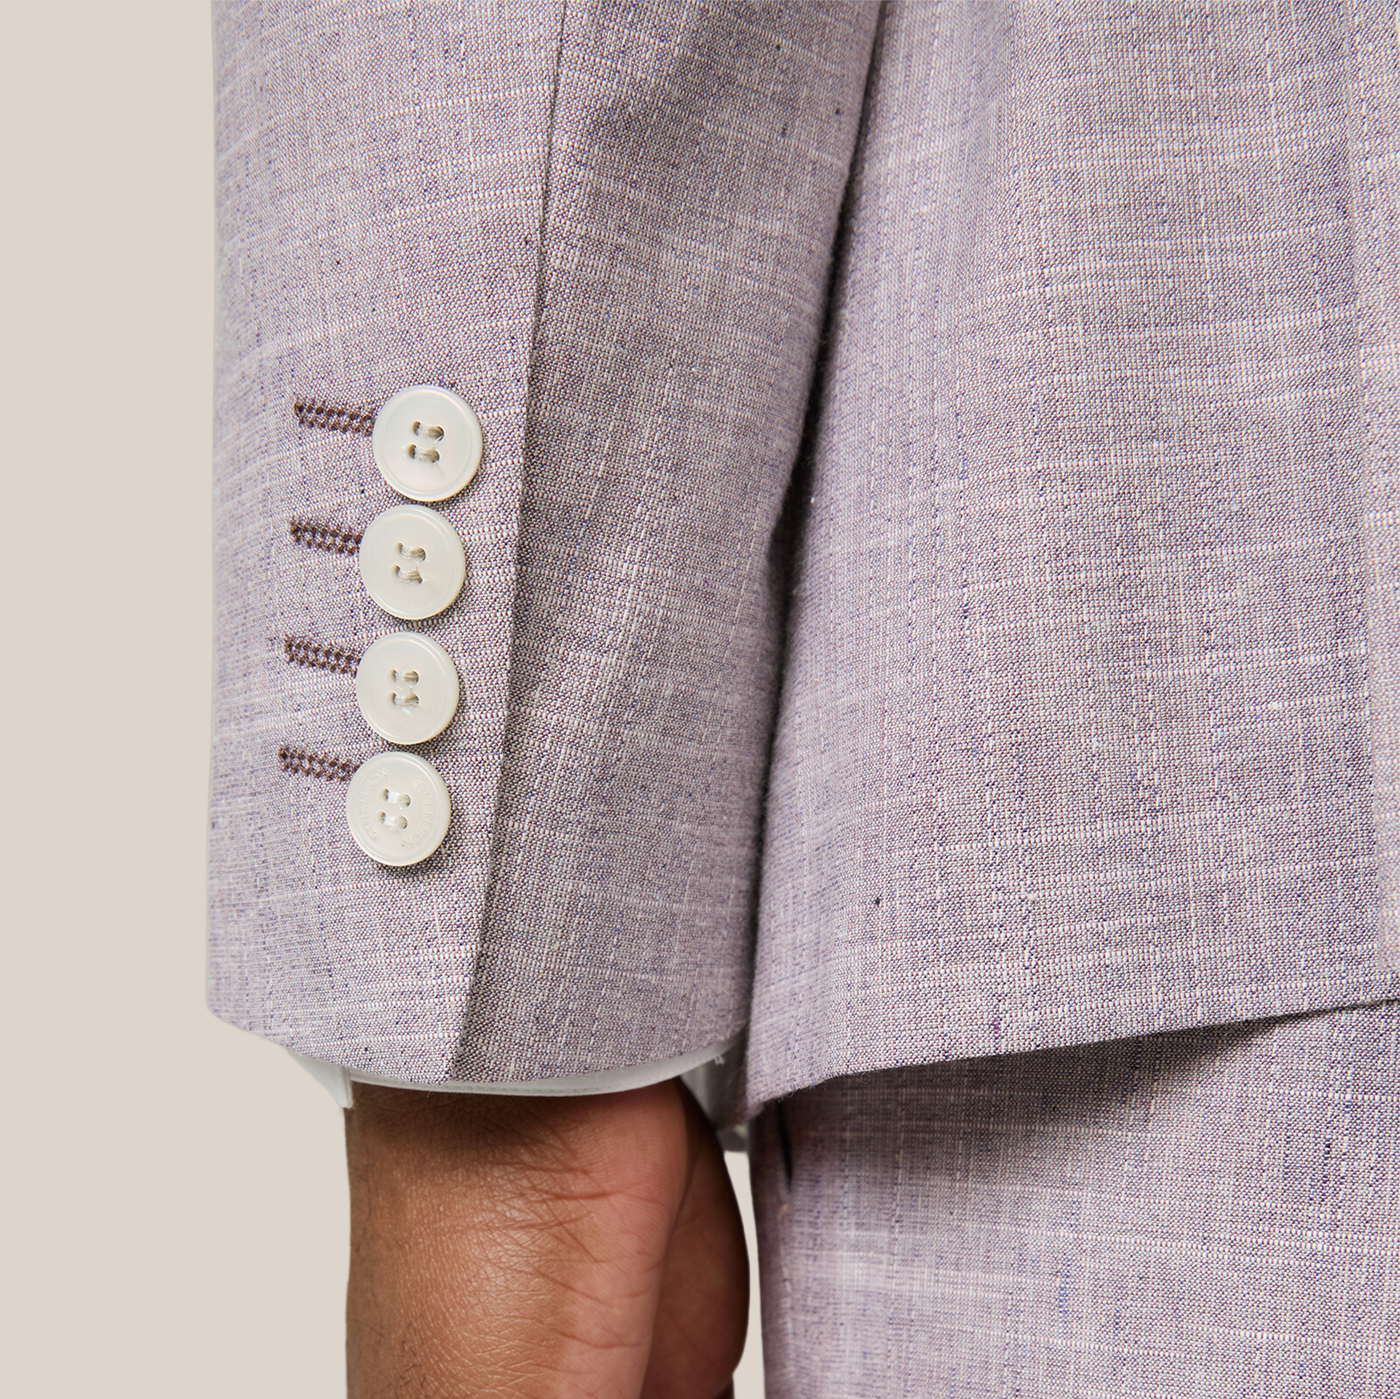 Gotstyle Fashion - Strellson Suits Mottled Cotton Wool Blend Peaked Suit Jacket - Violet